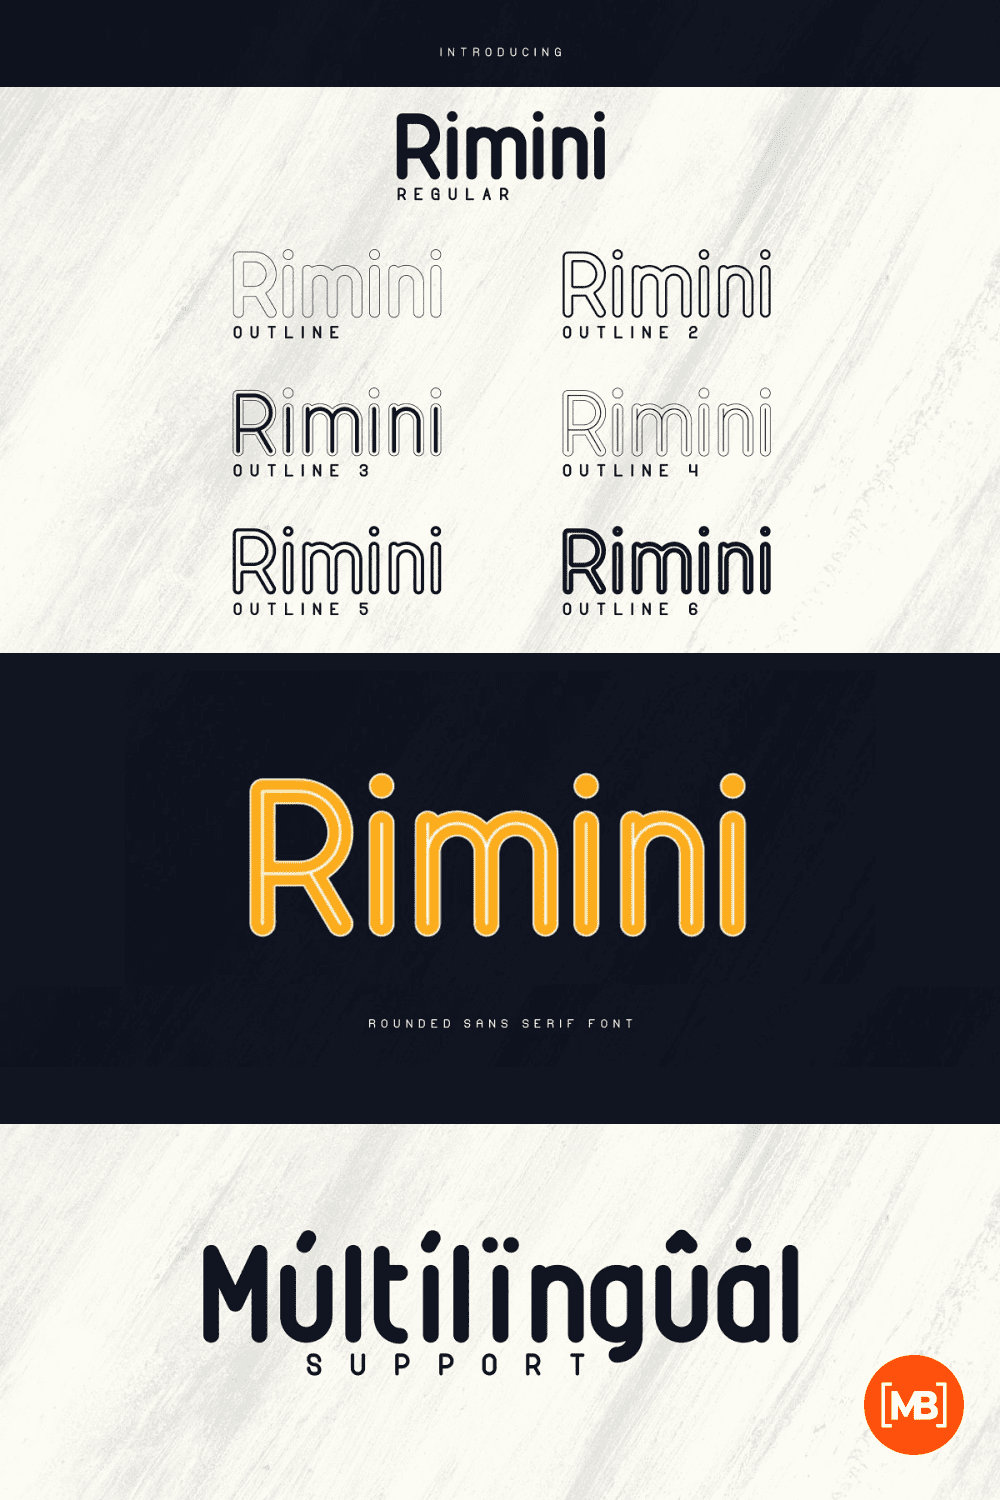 Pinterest Image: Rimini Rounded Sans Serif font.